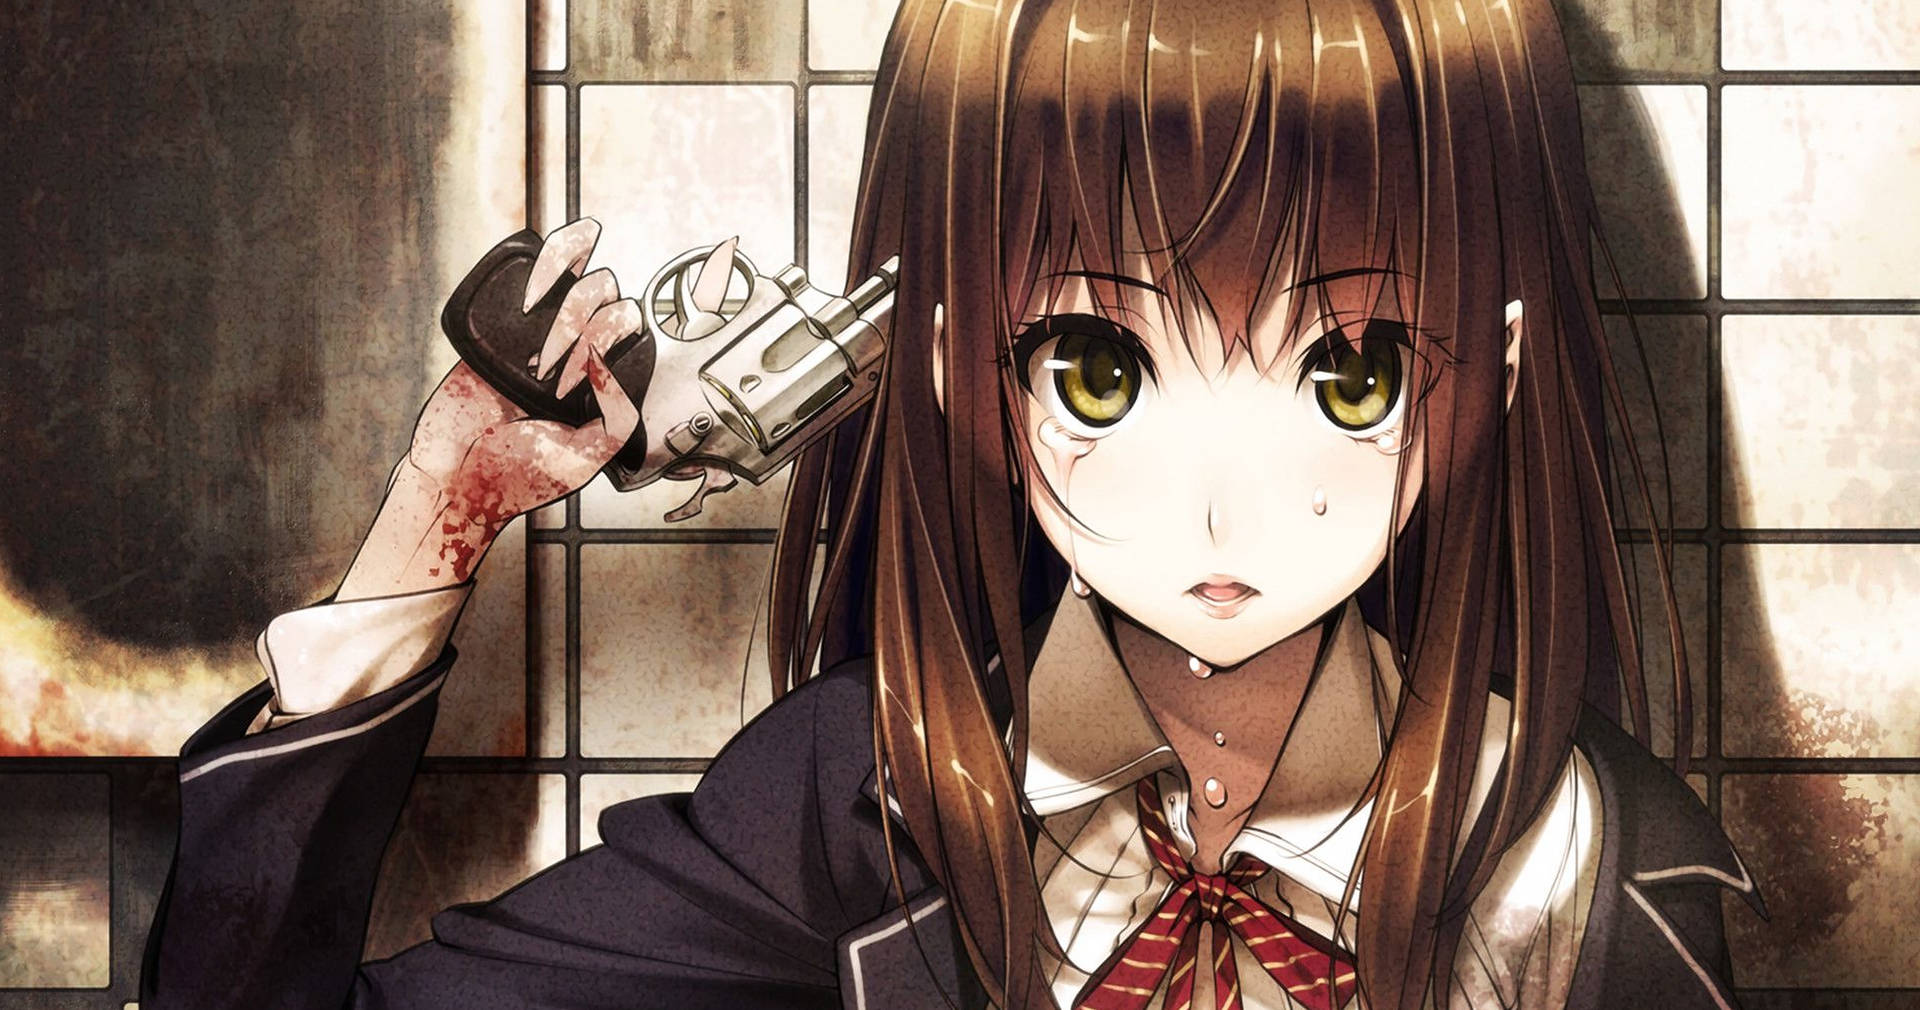 Depressed Anime Girl With Gun